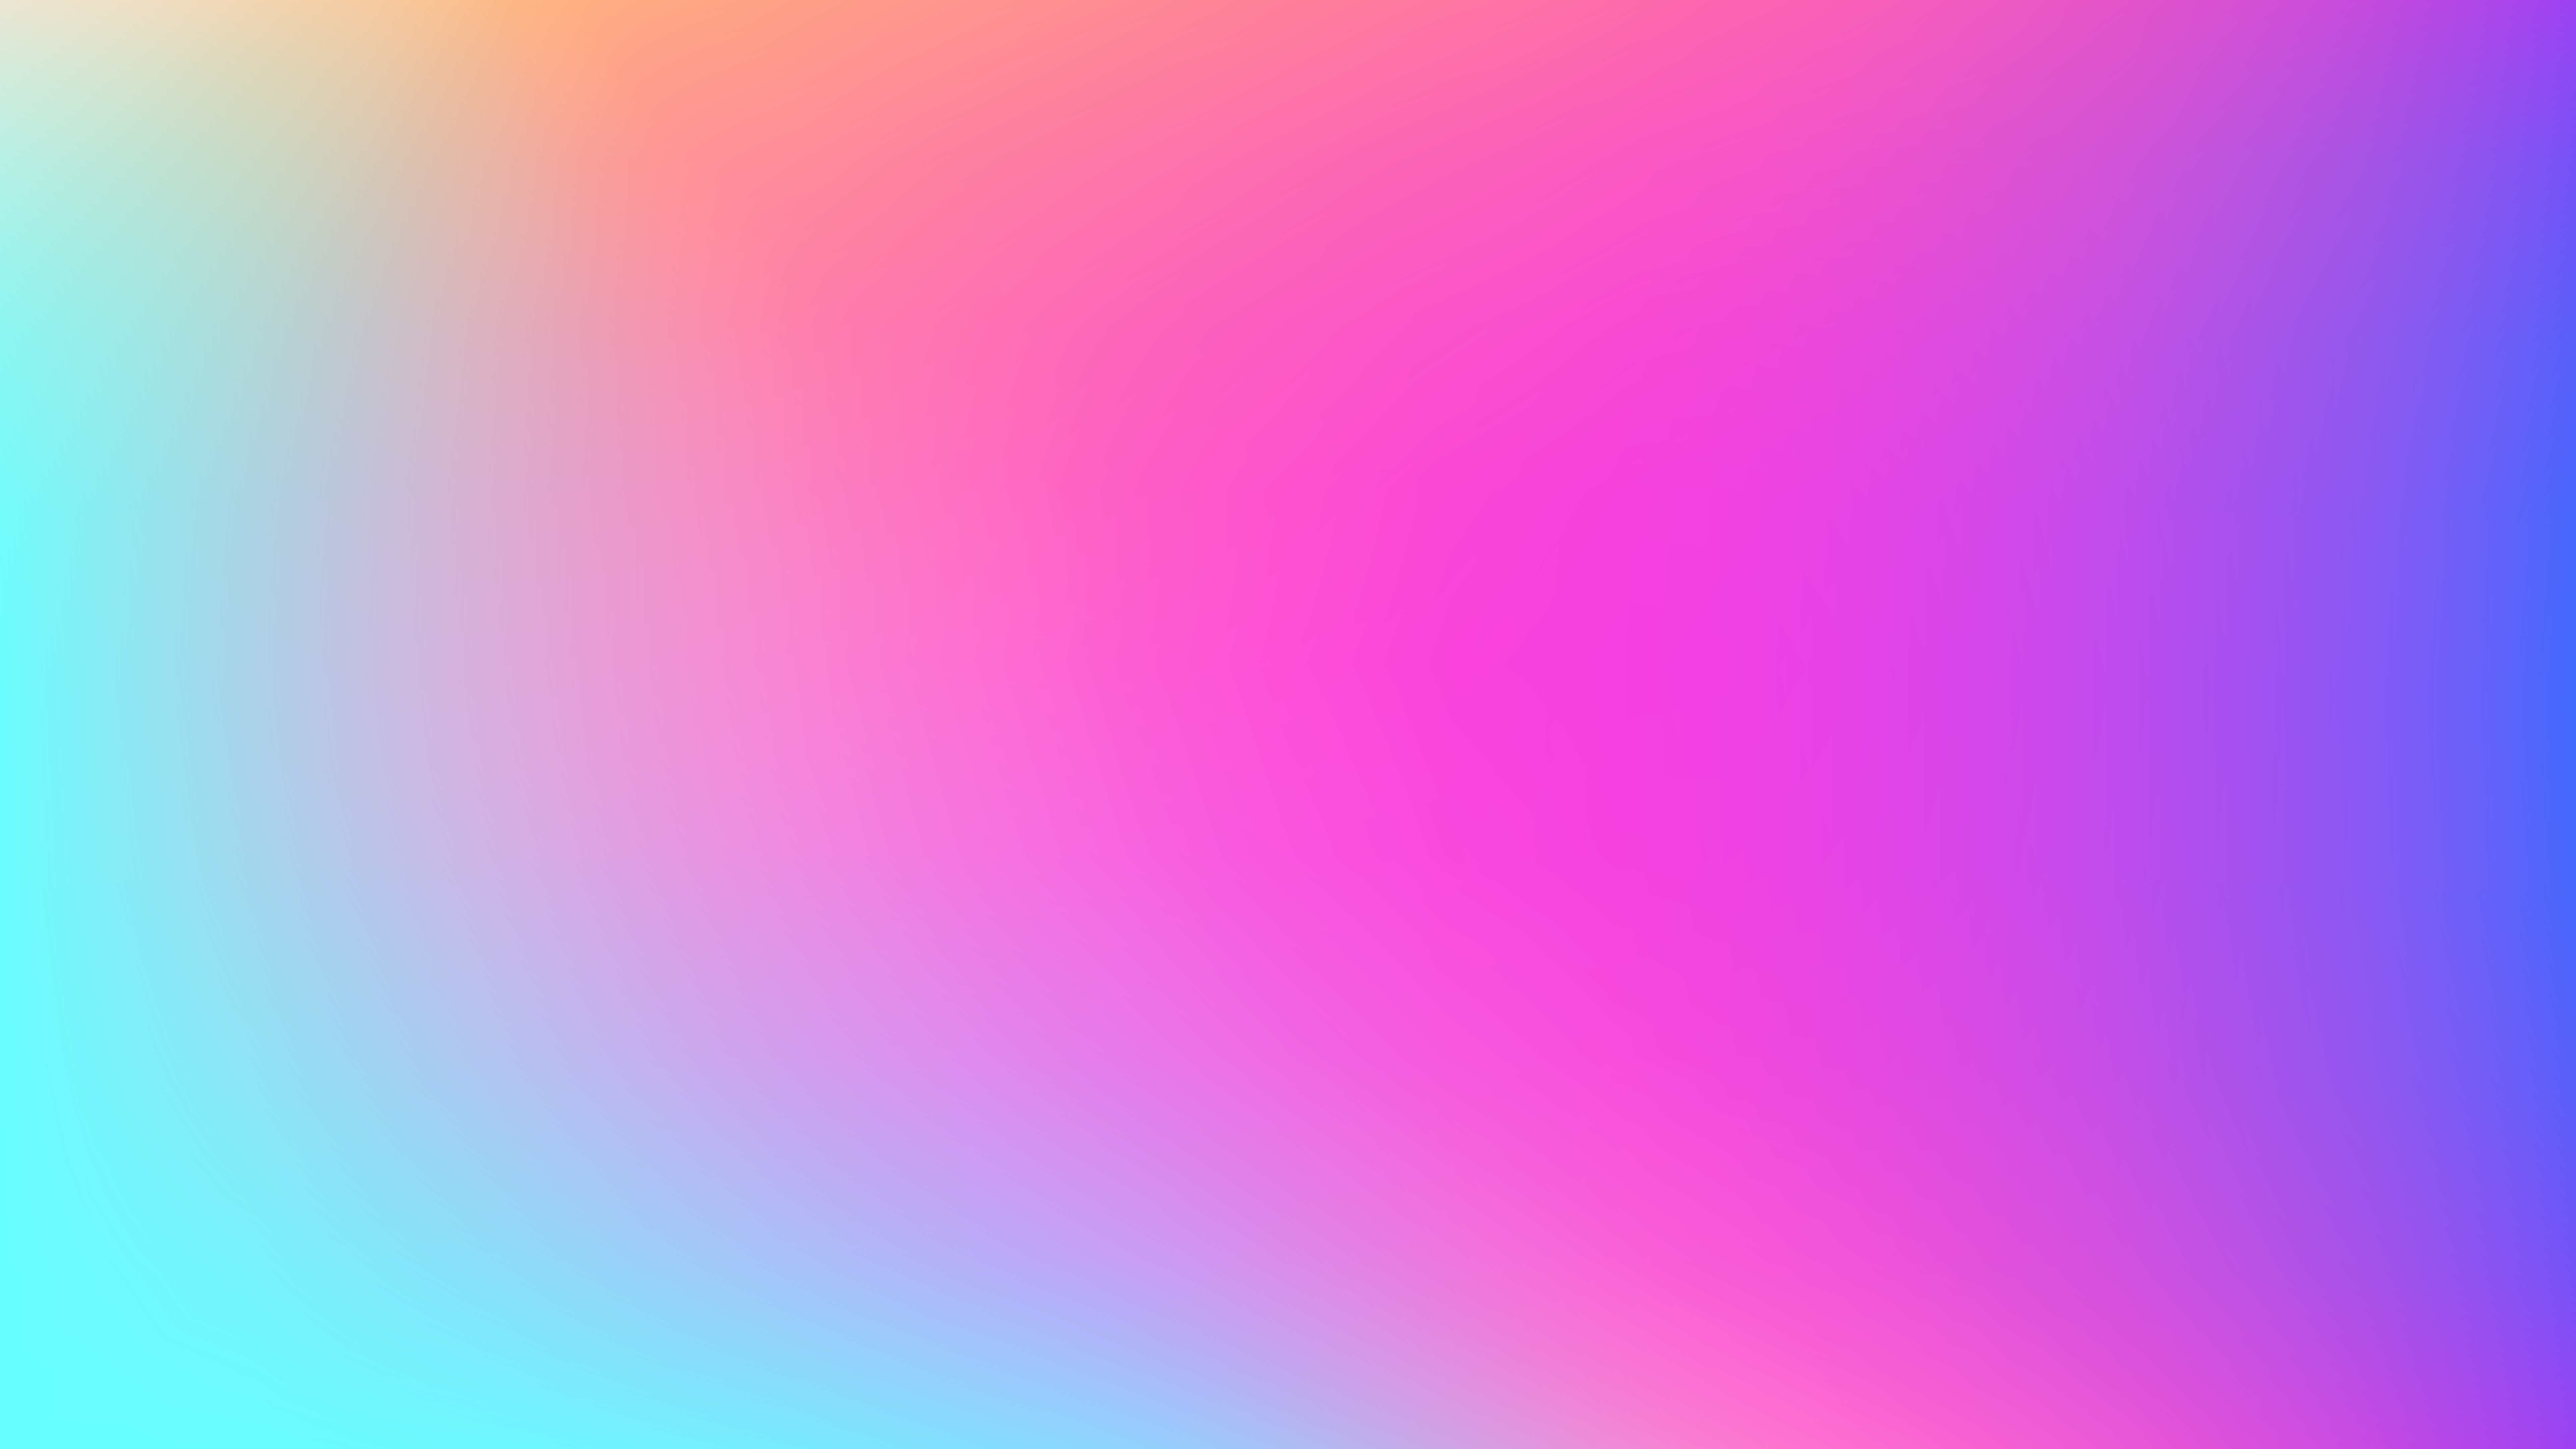  Farbverlauf Hintergrundbild 7680x4320. CLEAN AESTHETIC GRADIENT PC WALLPAPER 8K